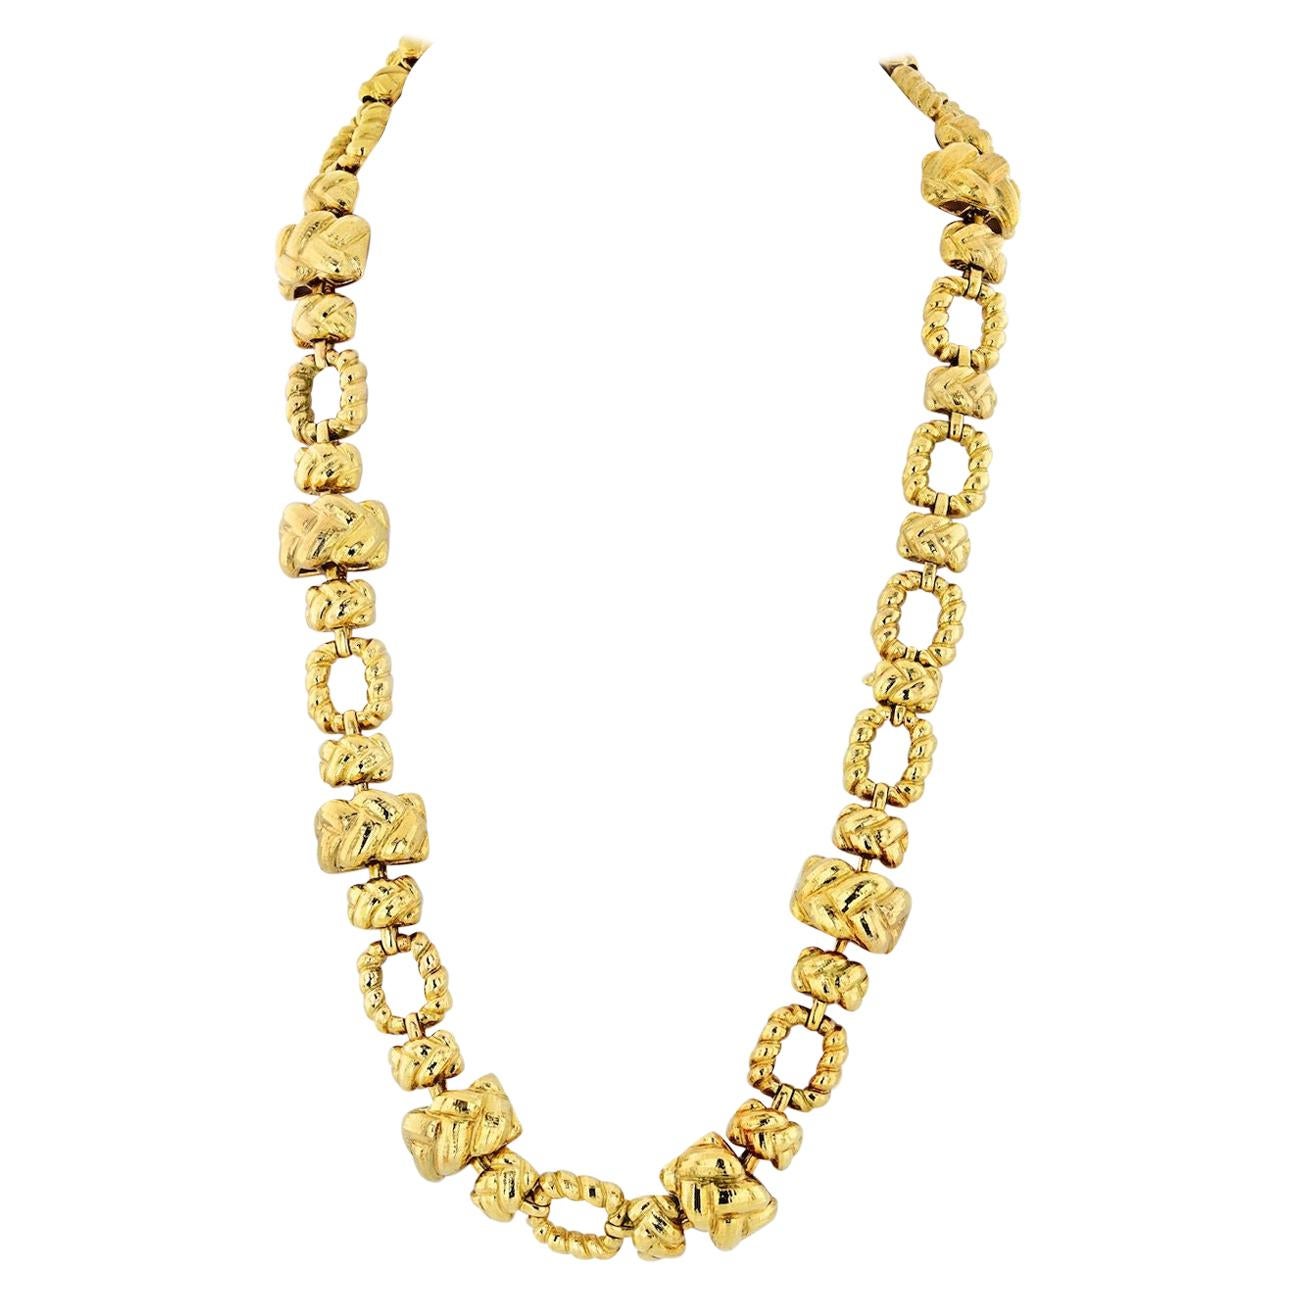 David Webb 1970s 18 Karat Yellow Gold Articulated Link Necklace